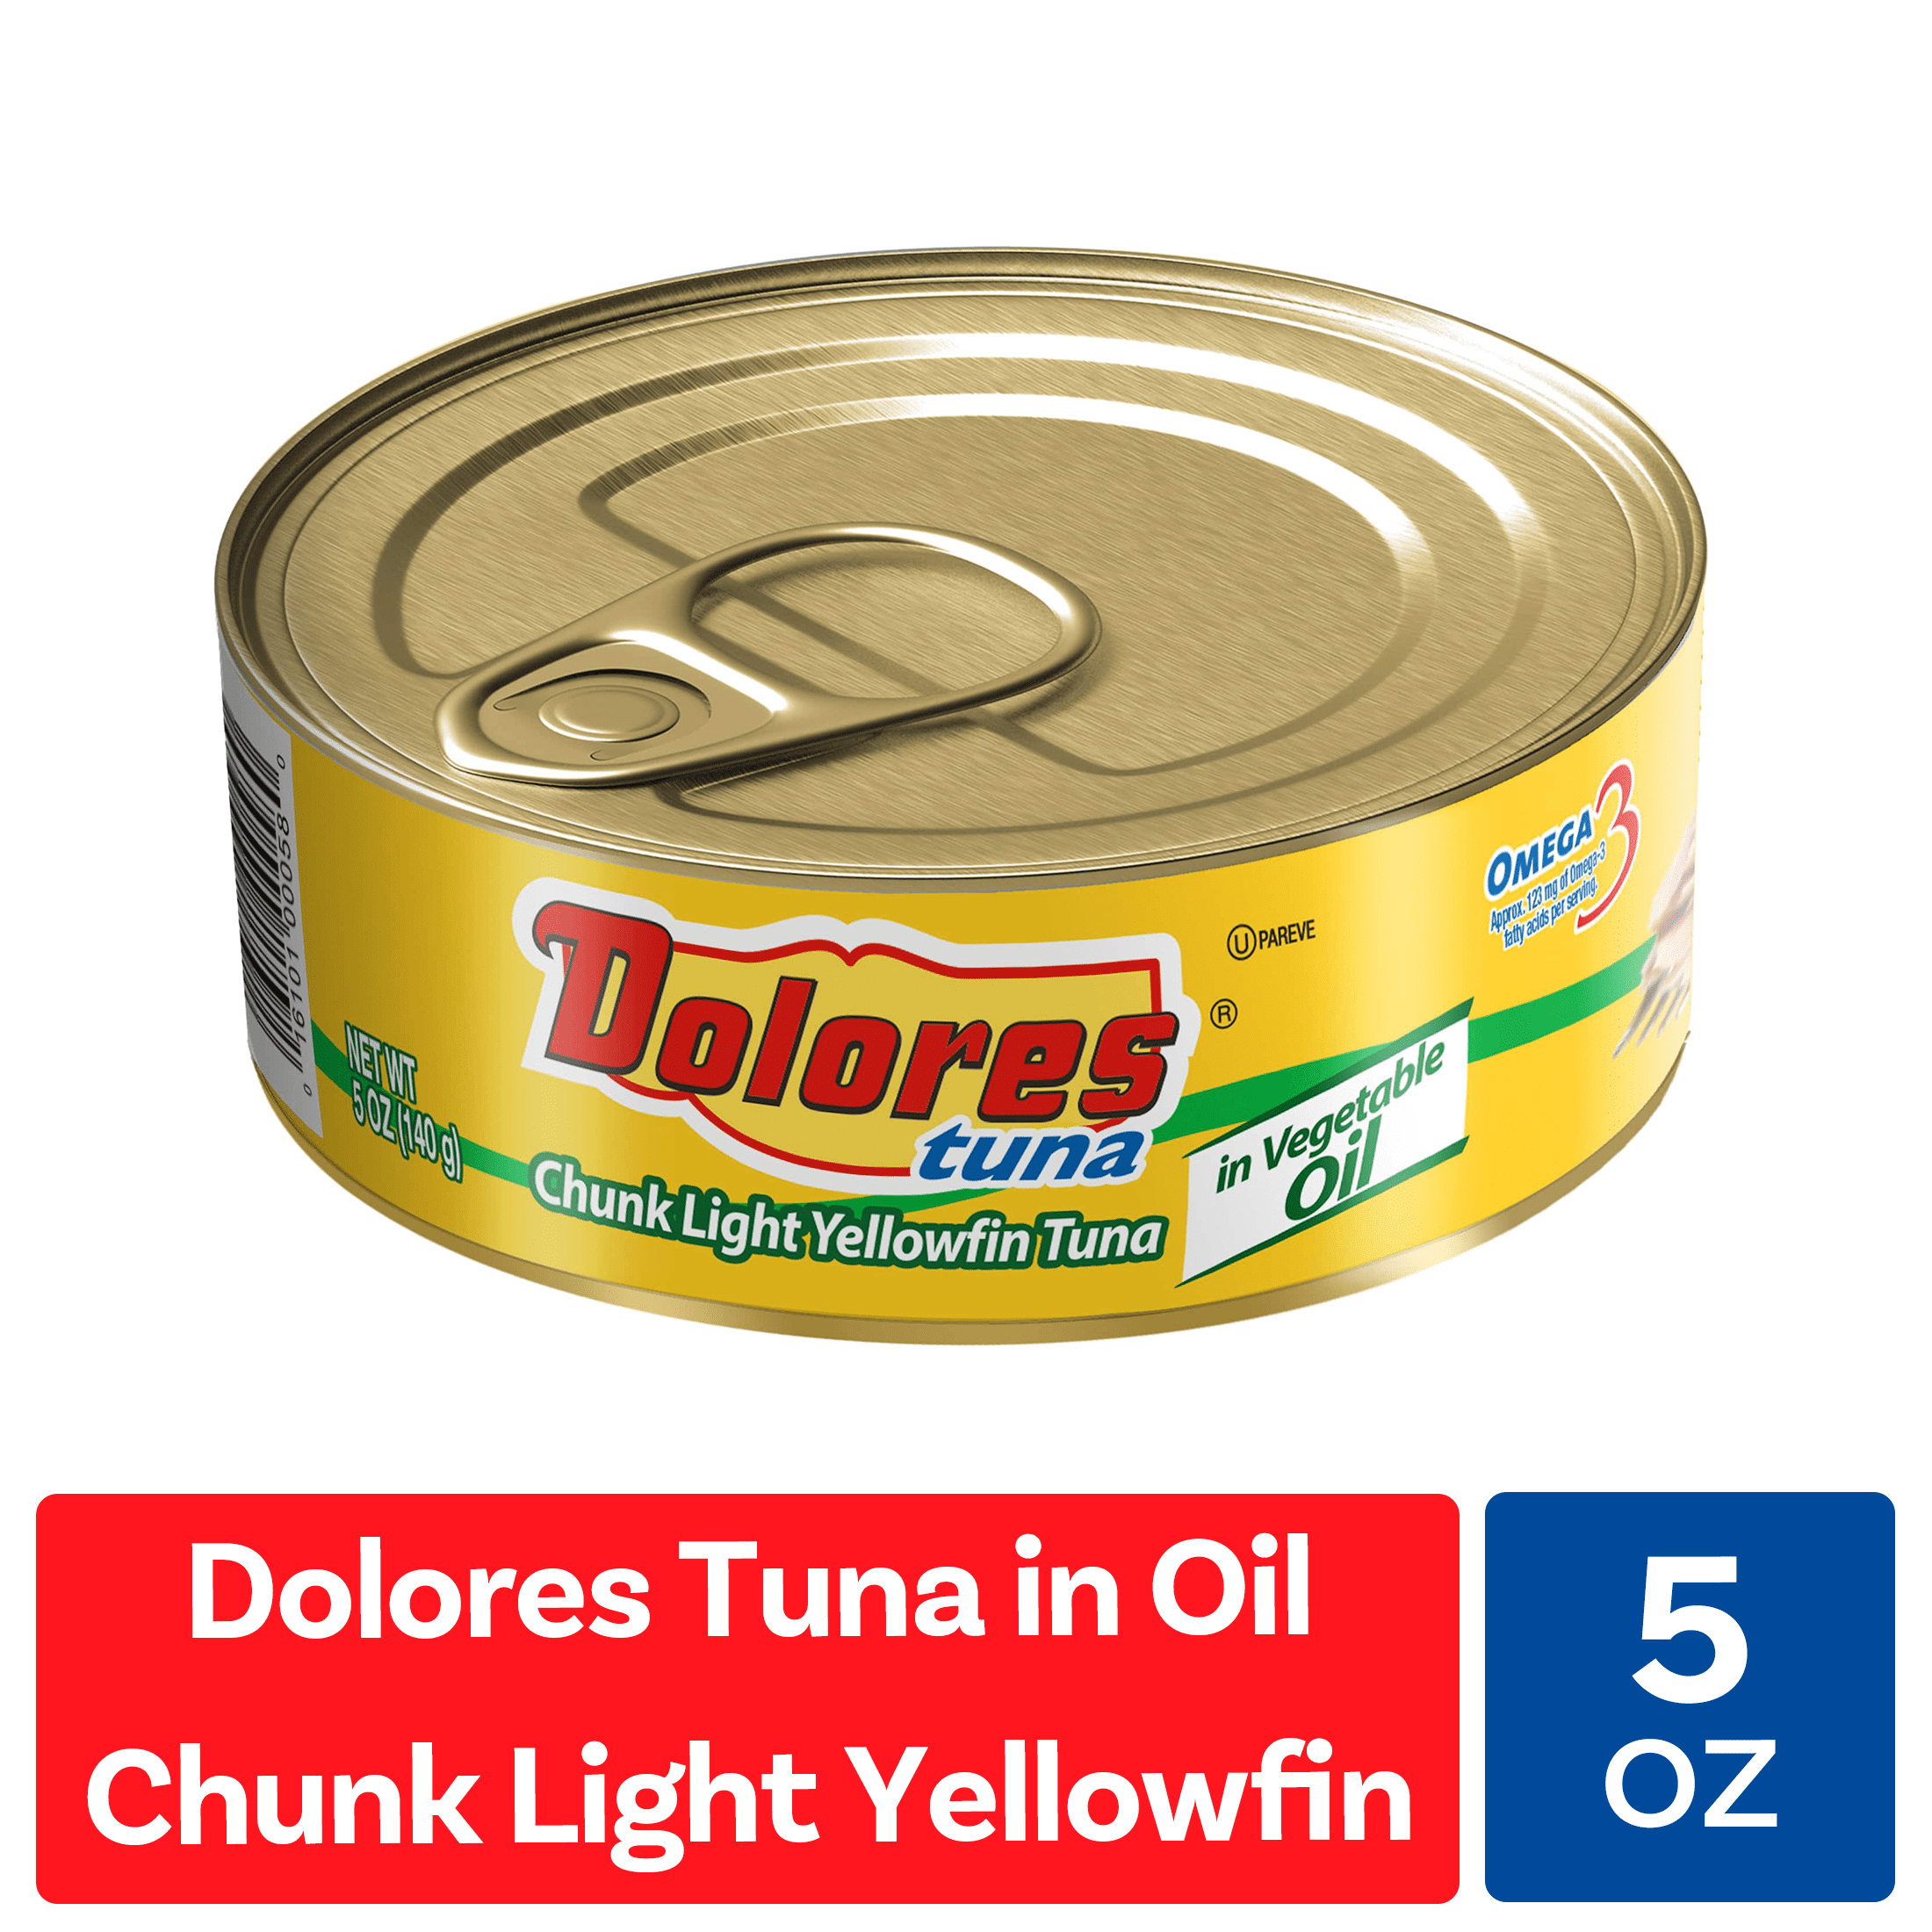 Dolores Tuna, Chunk Light Yellowfin Tuna in Vegetable Oil, 5 oz Can